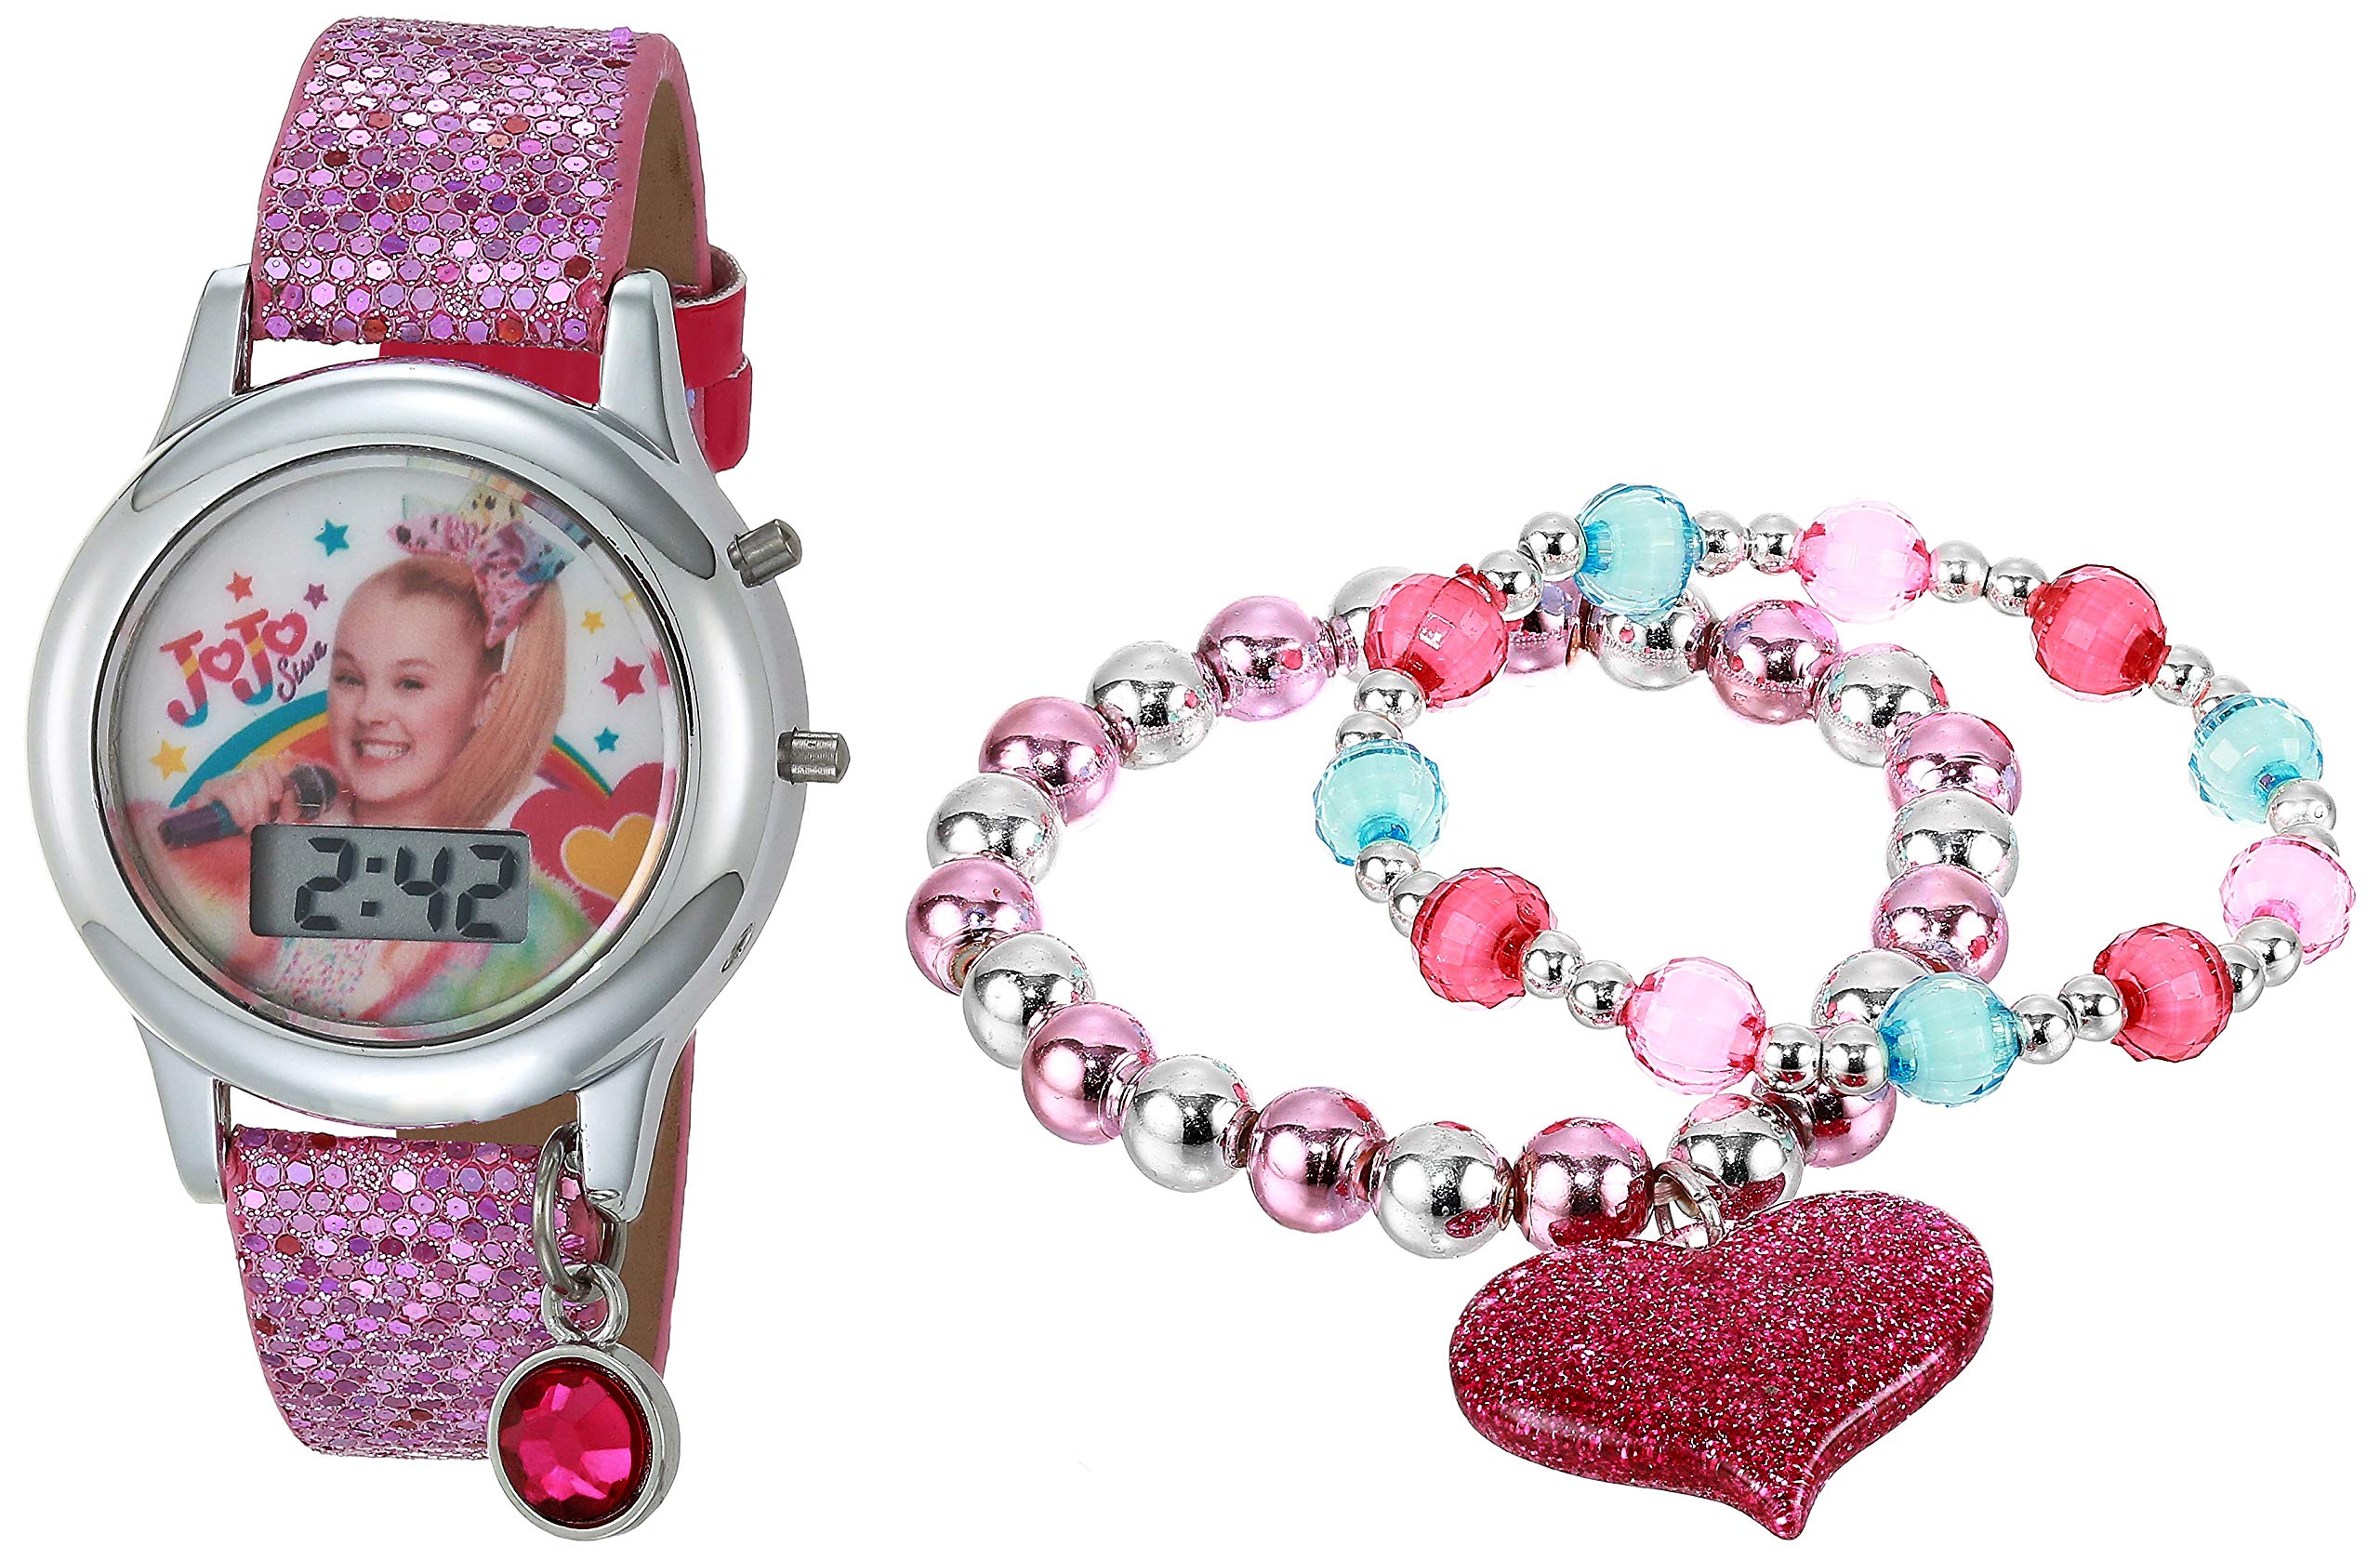 Accutime JoJo Siwa Girls' Quartz Watch with Rubber Strap, Pink and Multicolor, 13mm [Model: JOJ40050AZ]